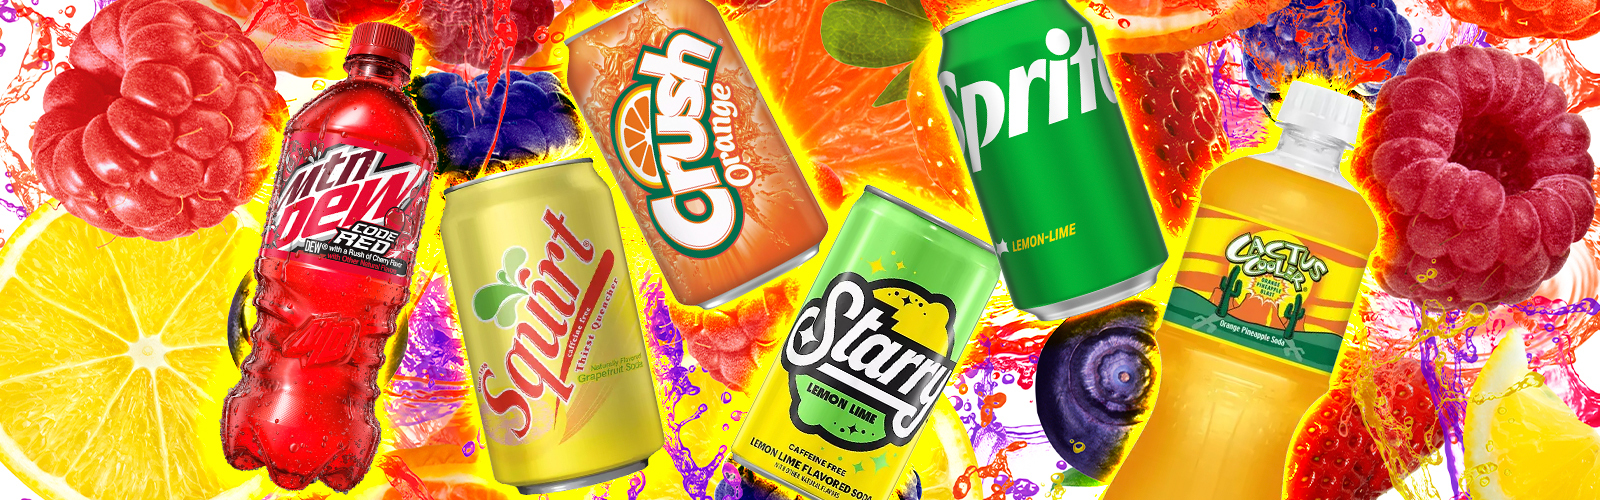 Crush® Zero Sugar Orange Flavored Soda 12 fl oz - Keurig Dr Pepper Product  Facts